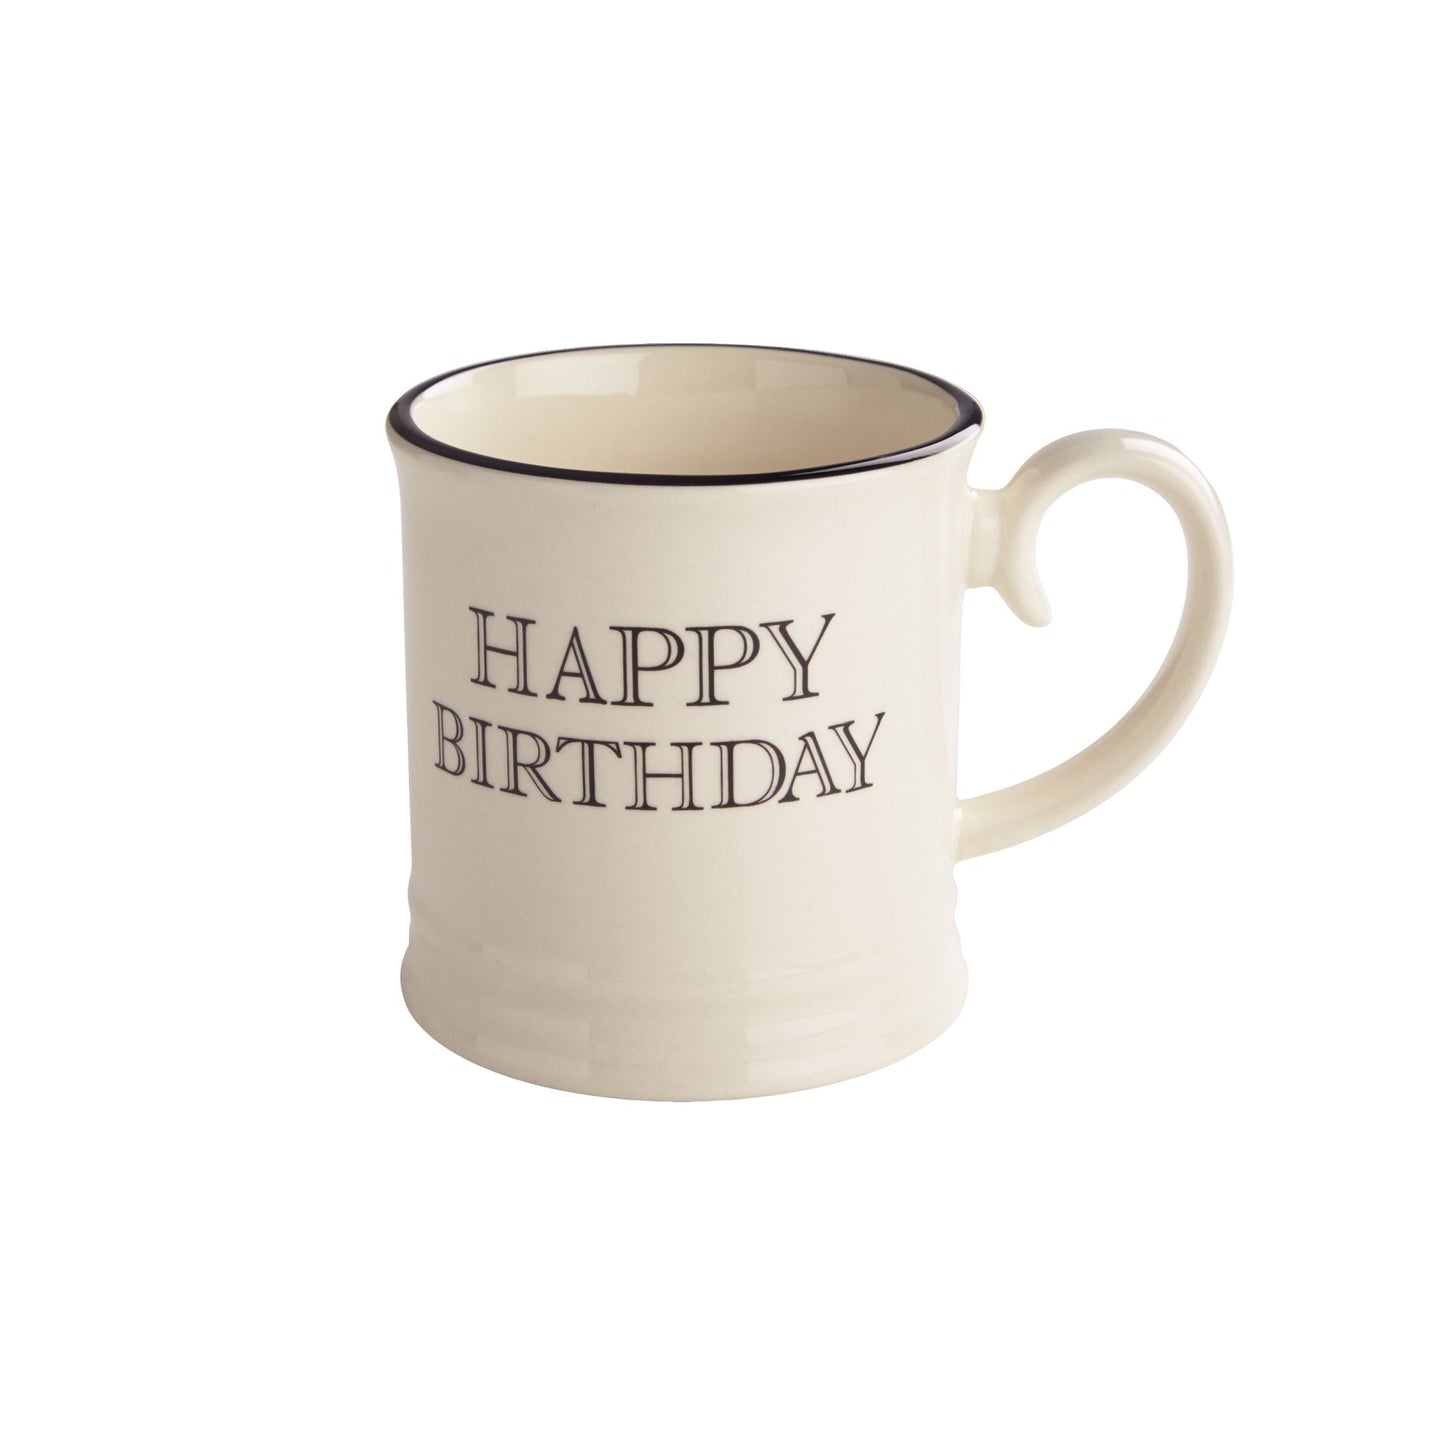 Fairmont & Main Happy Birthday - Tankard Mug